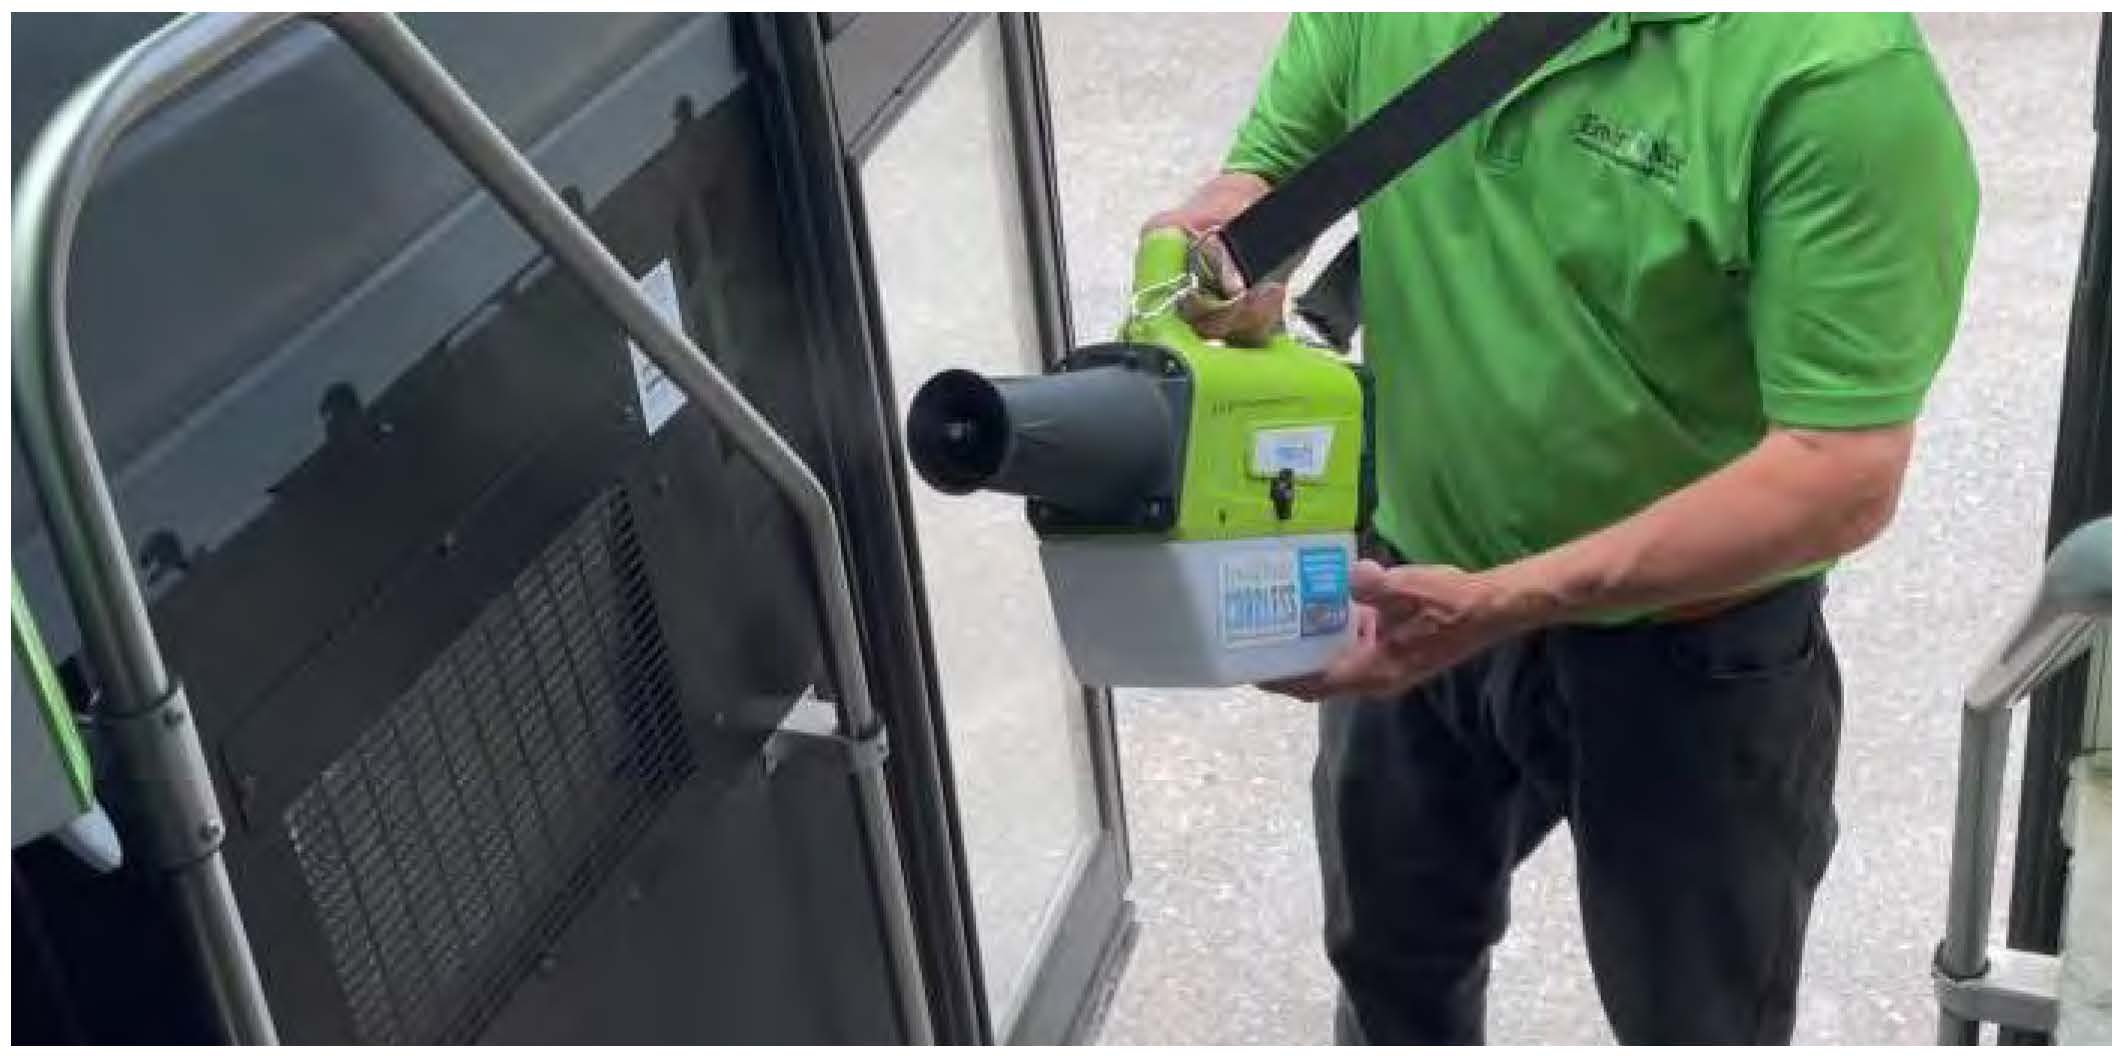 EnviroNizer Cordless Disinfectant Sprayer school bus handles